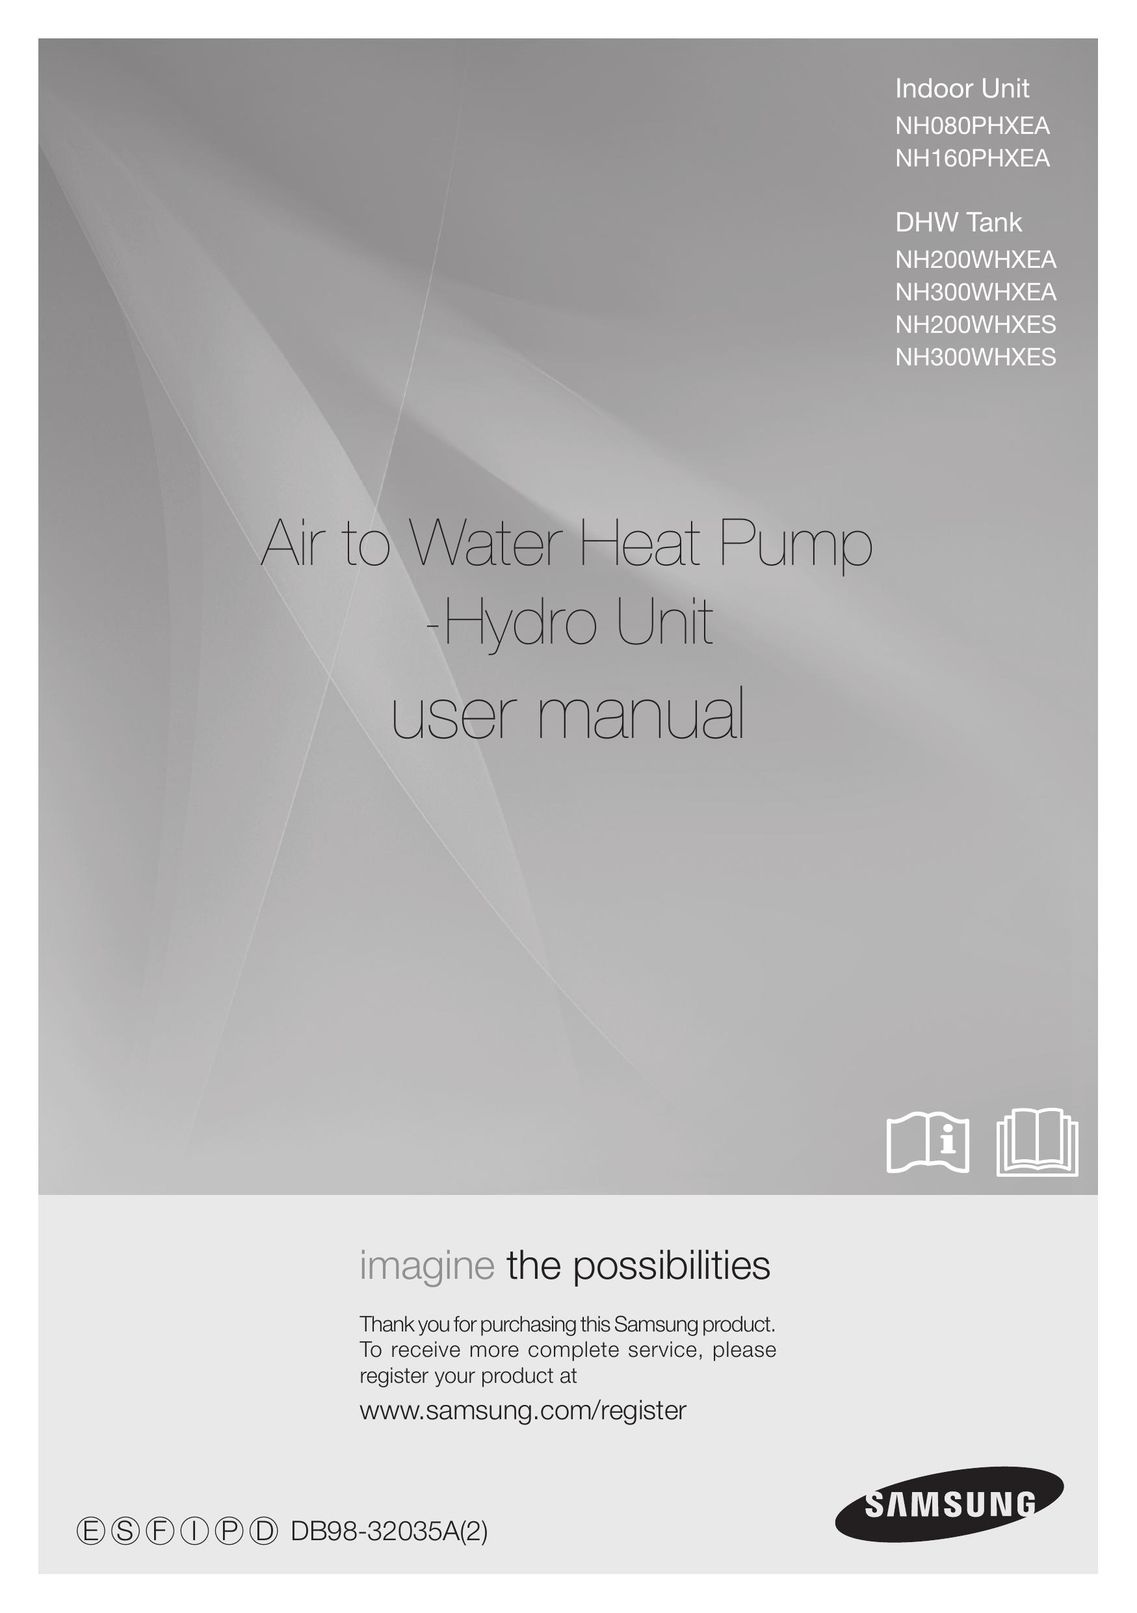 Samsung NH200WHXES Heat Pump User Manual